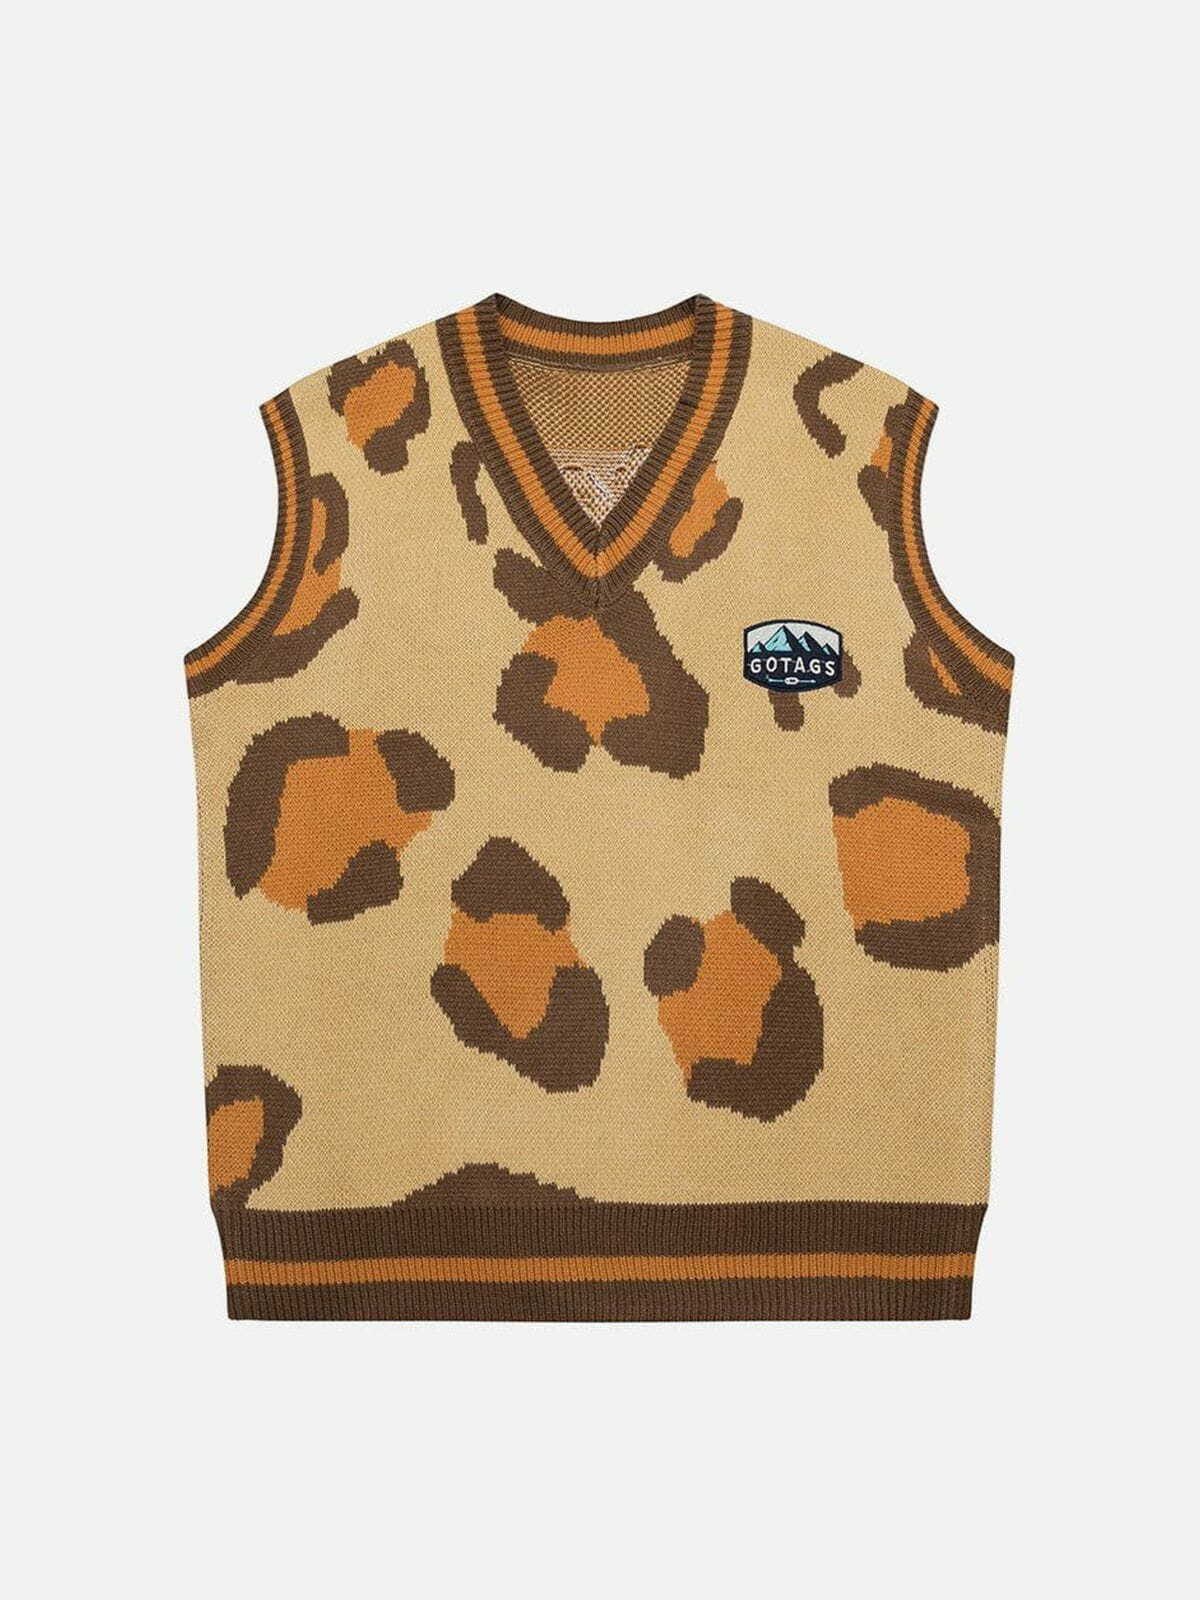 leopard print vest edgy  retro animal patterned sleeveless top 7617